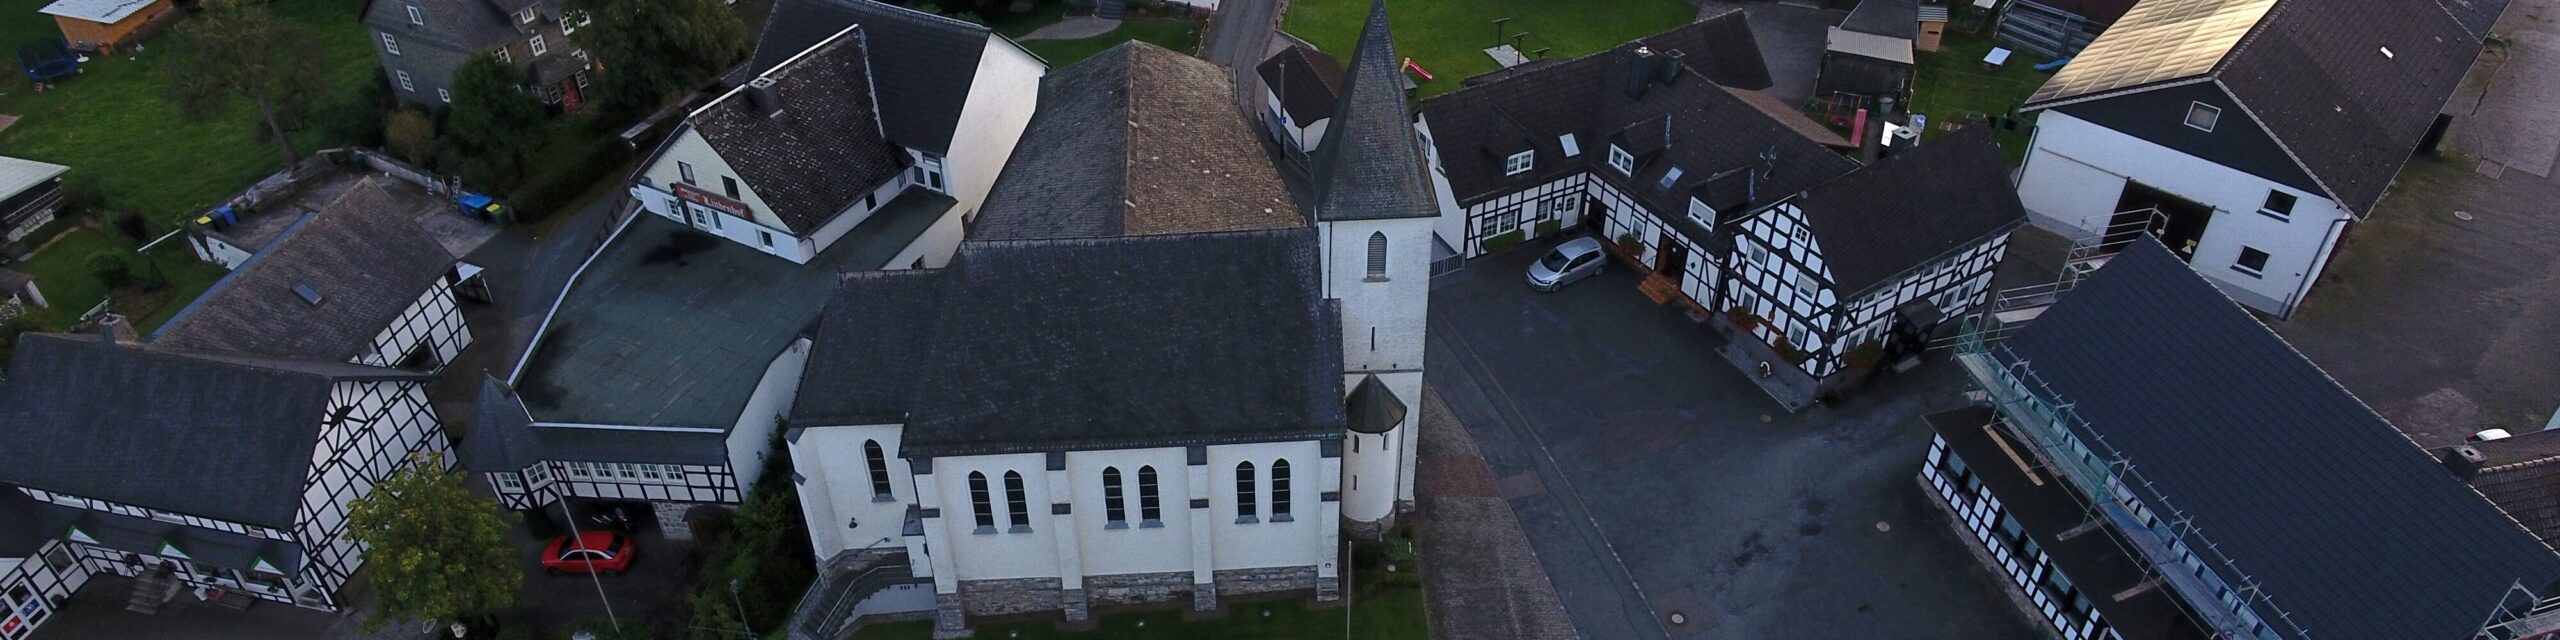 Kirche Oberschledorn